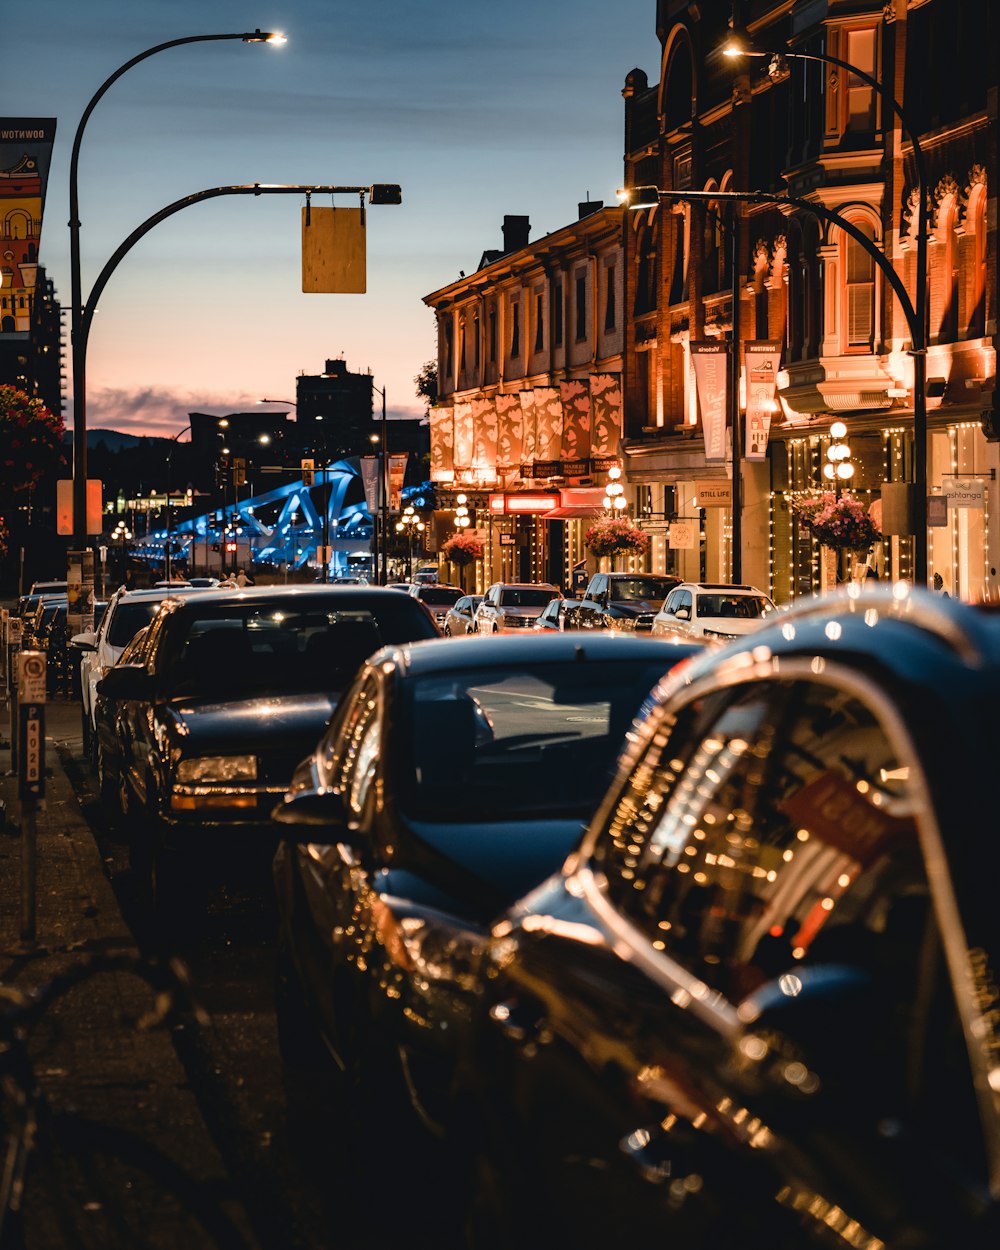 cars on roadside at nighttime